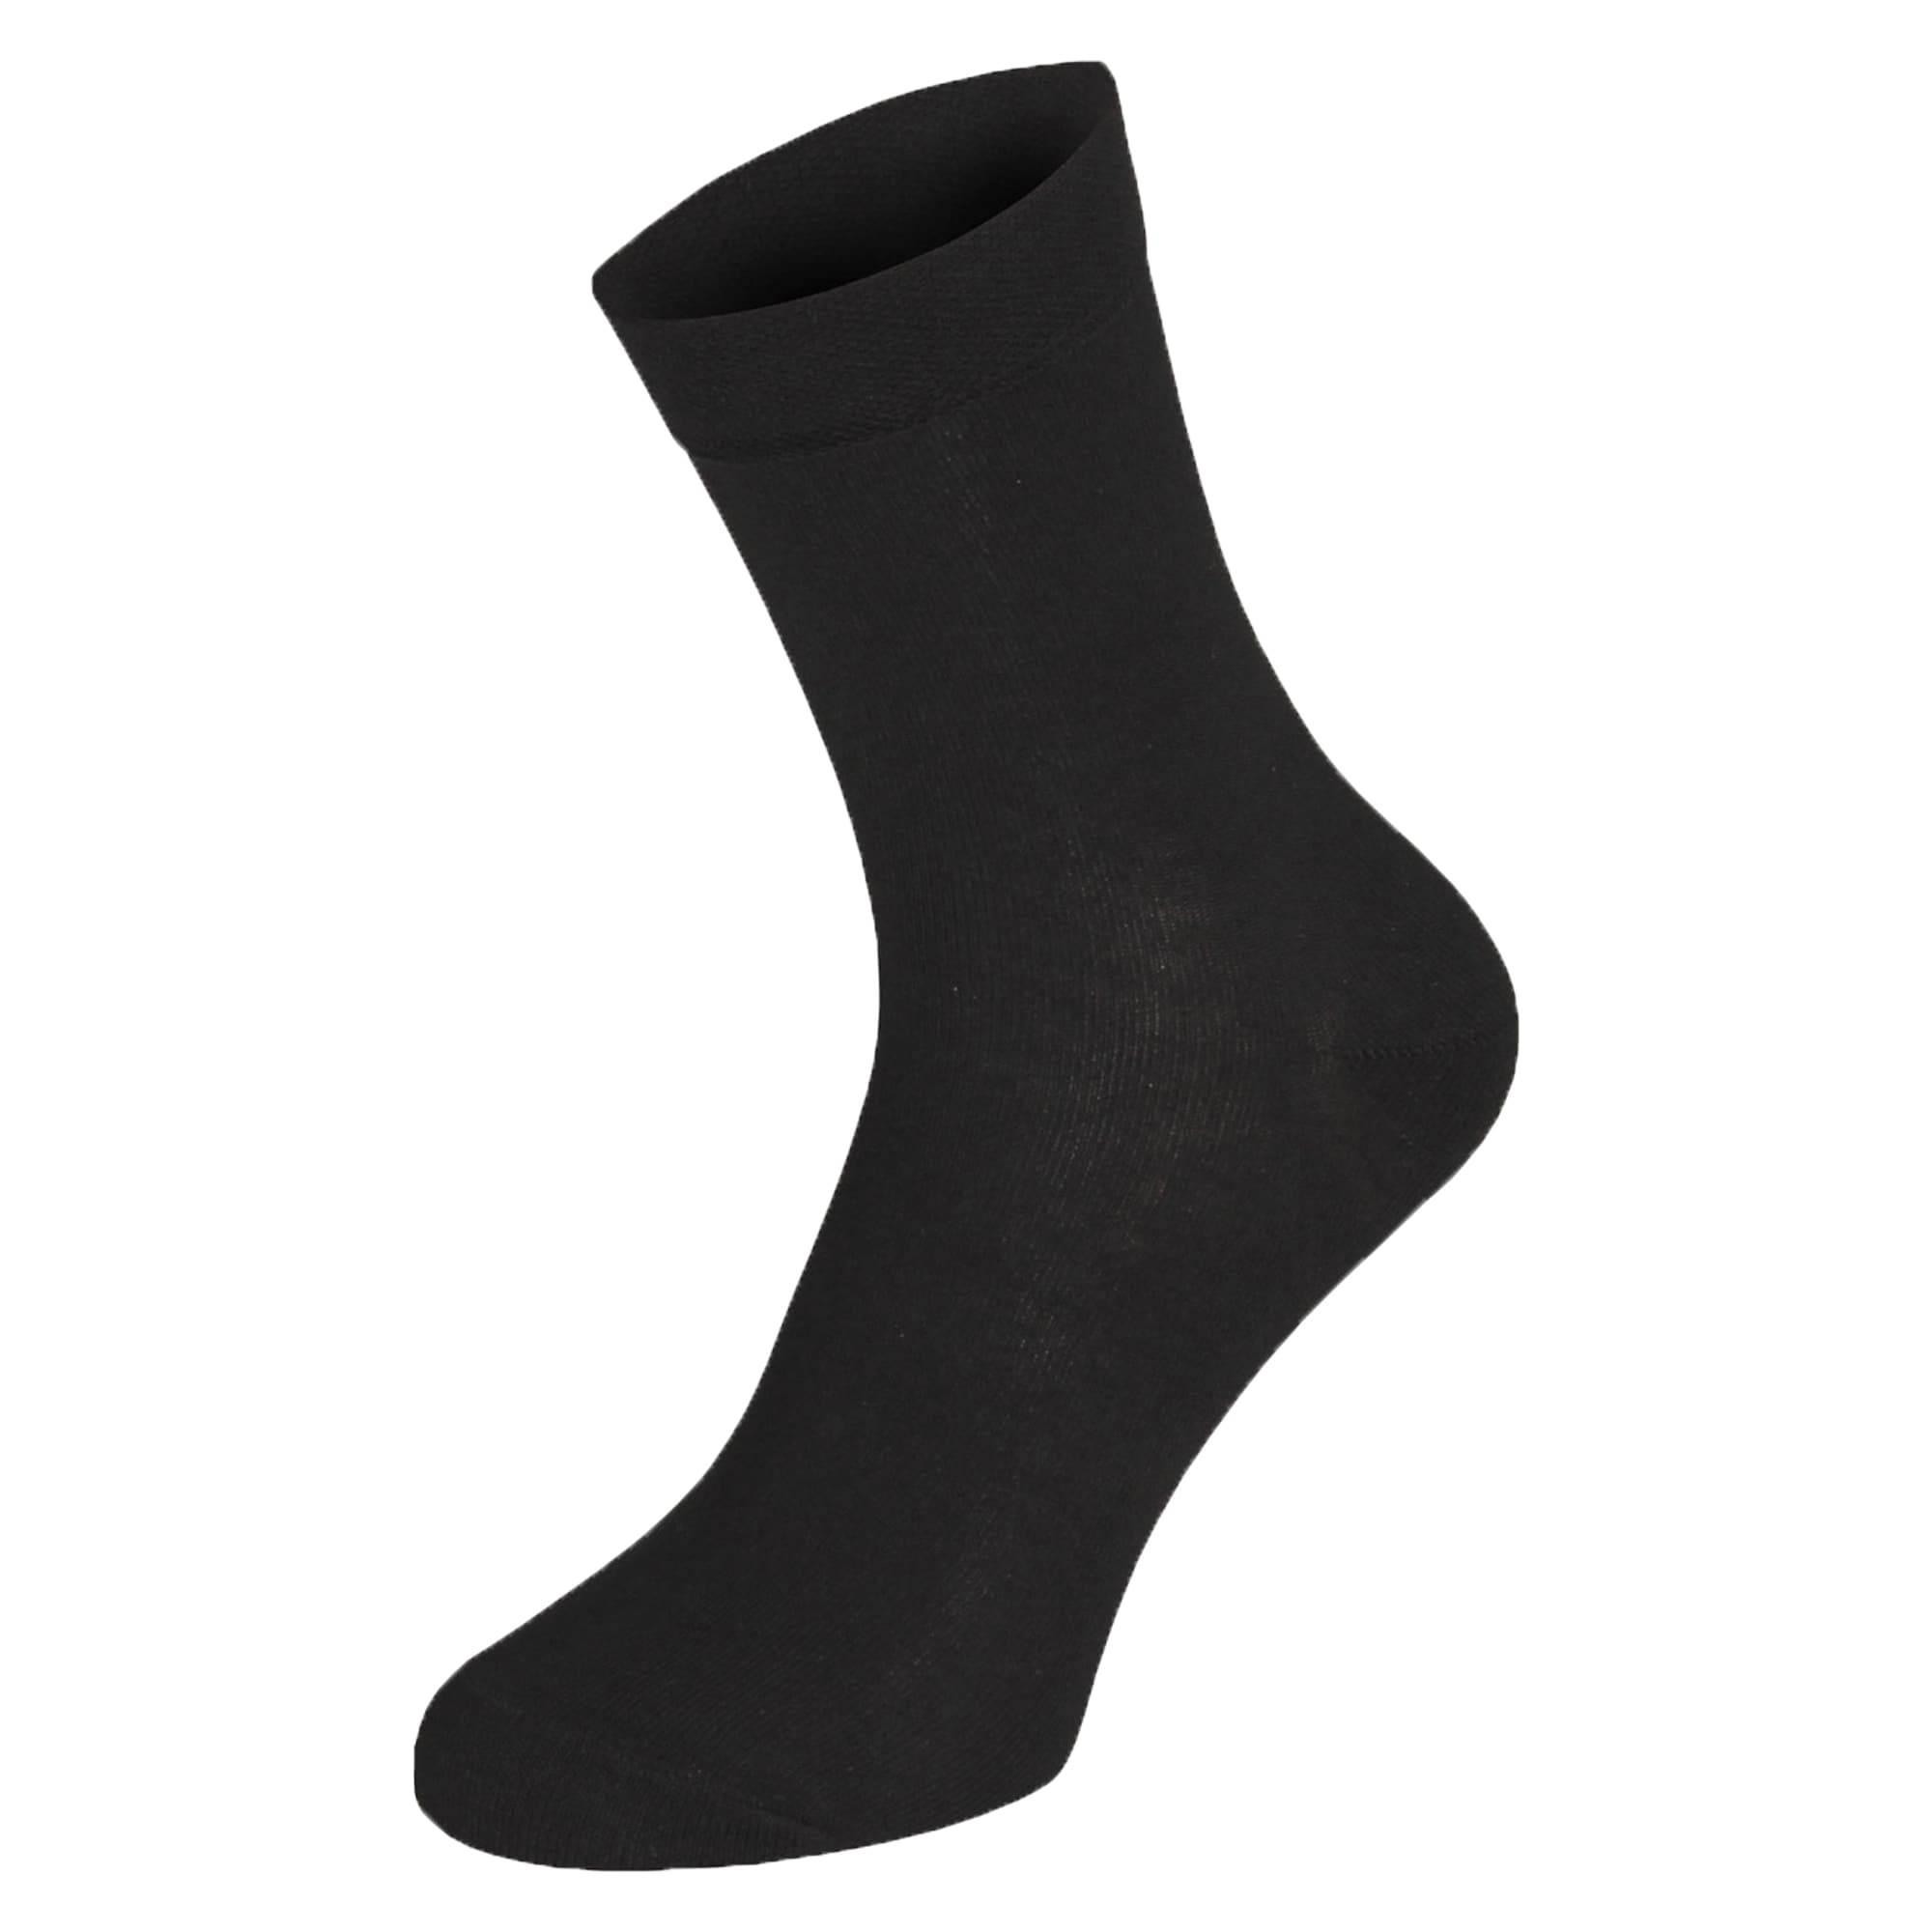 Purchase the MFH Socks OEKO Bamboo black by ASMC